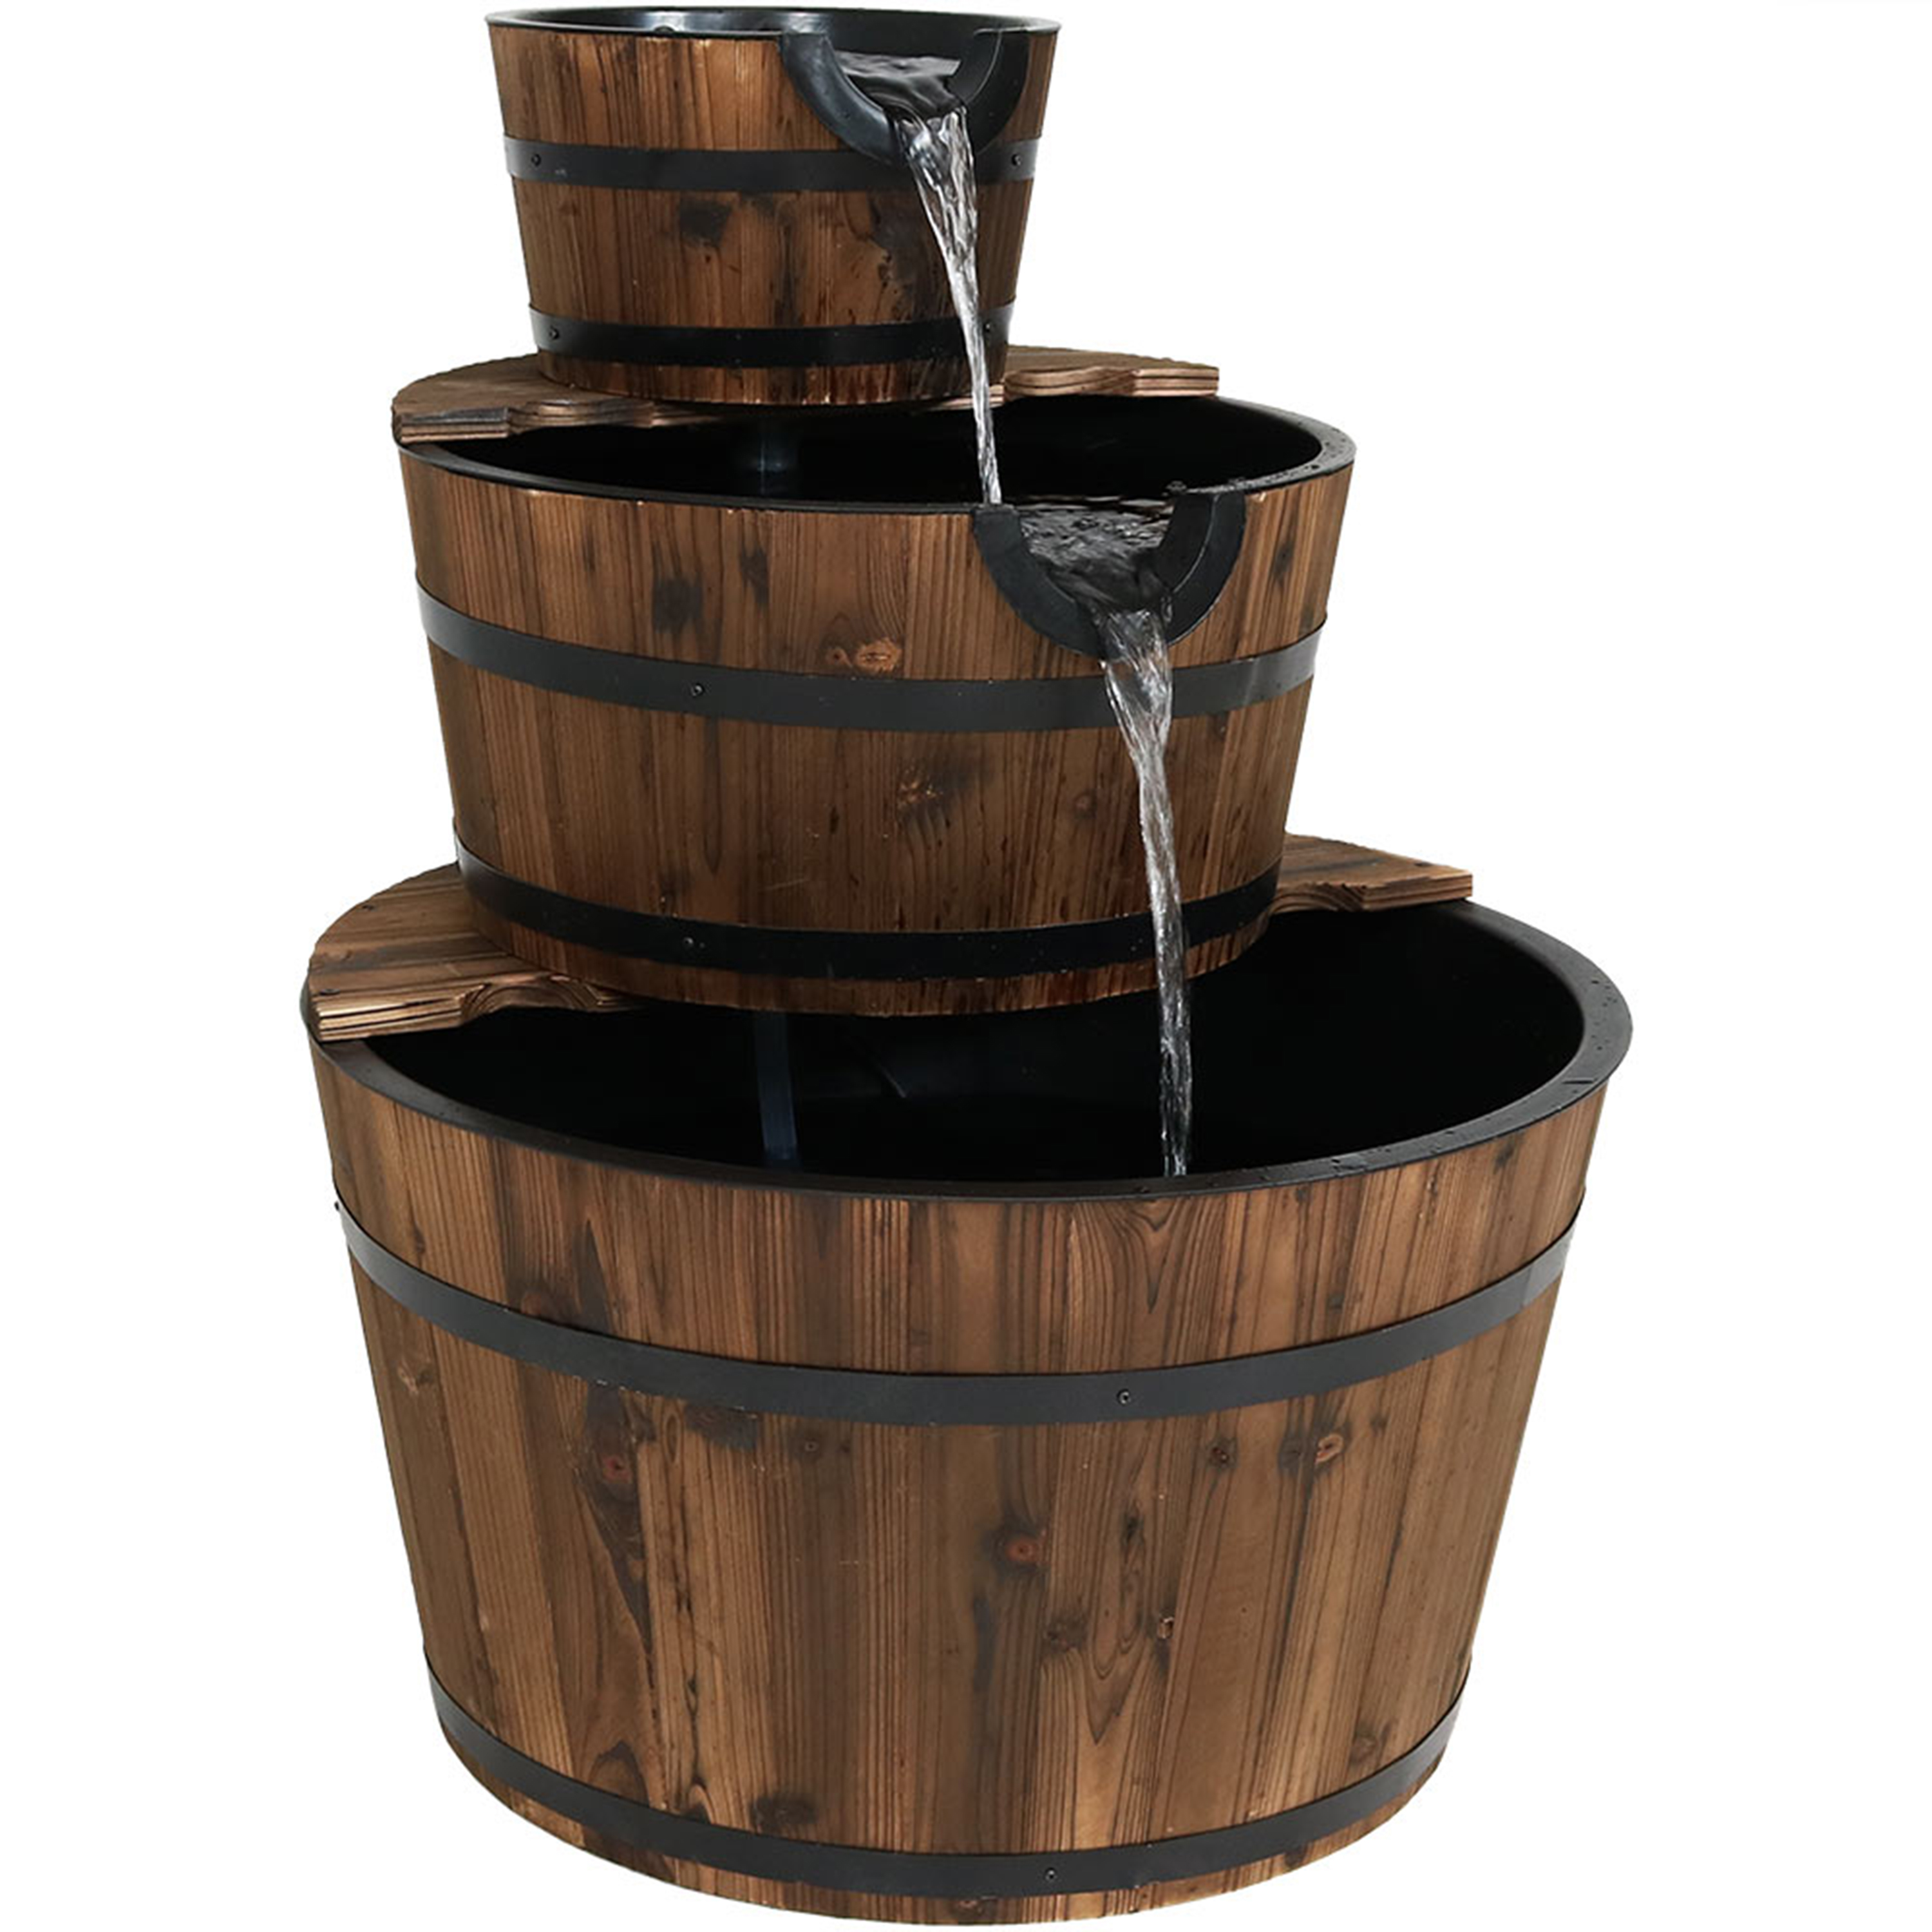 Sunnydaze Rustic 3-Tier Wood Barrel Water Fountain - 30-Inch